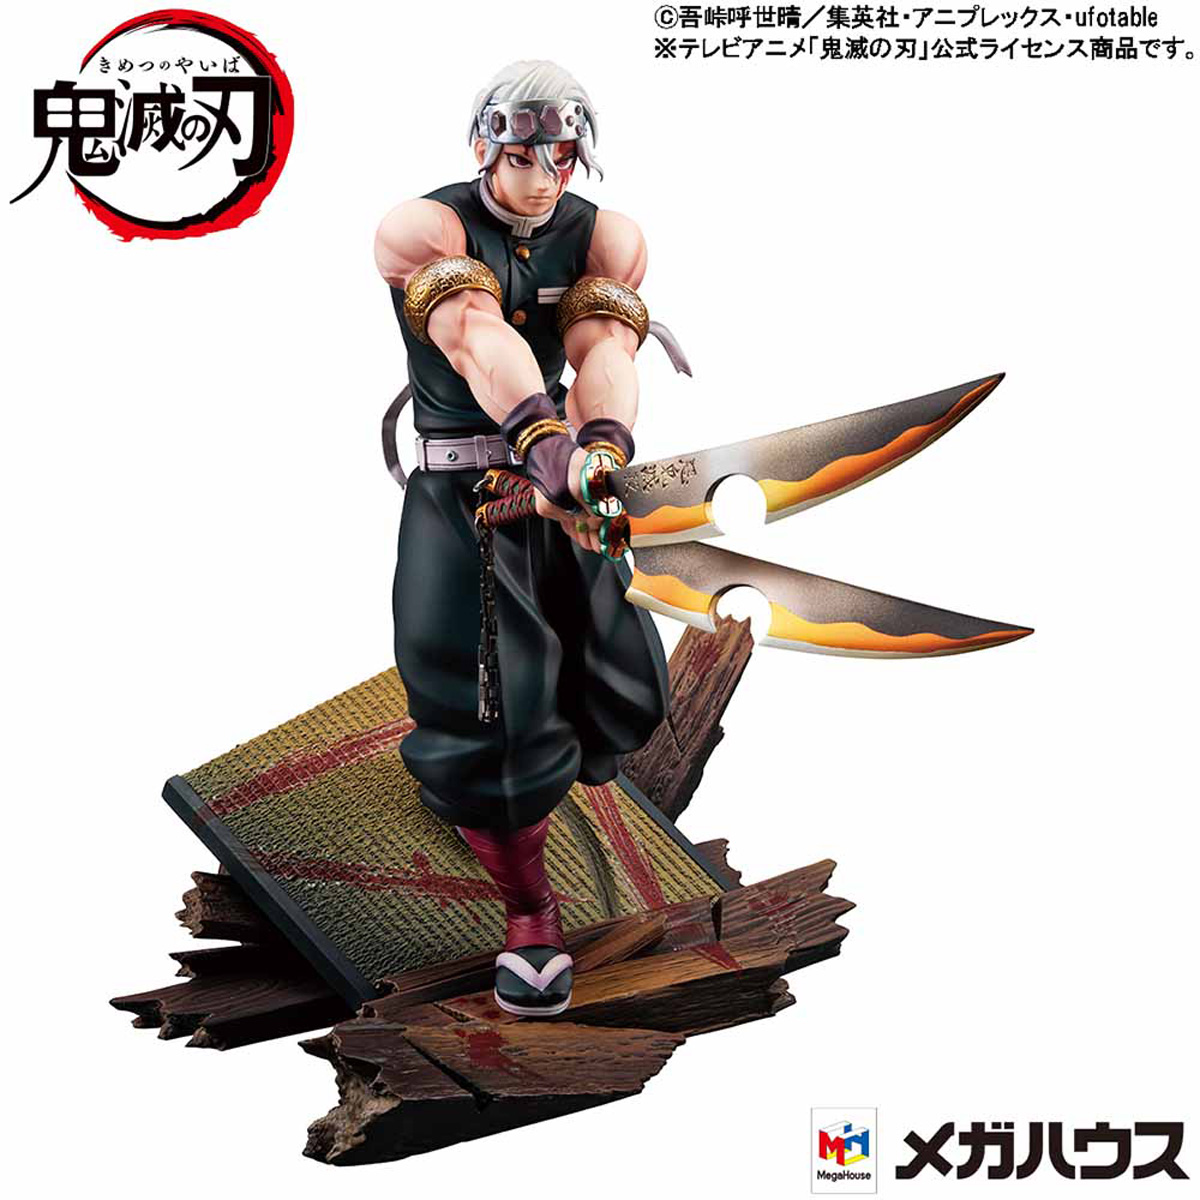 Tengen Uzui - Demon Slayer (Kimetsu no Yaiba) Minifigures Block Toys  781936294960 on eBid United States